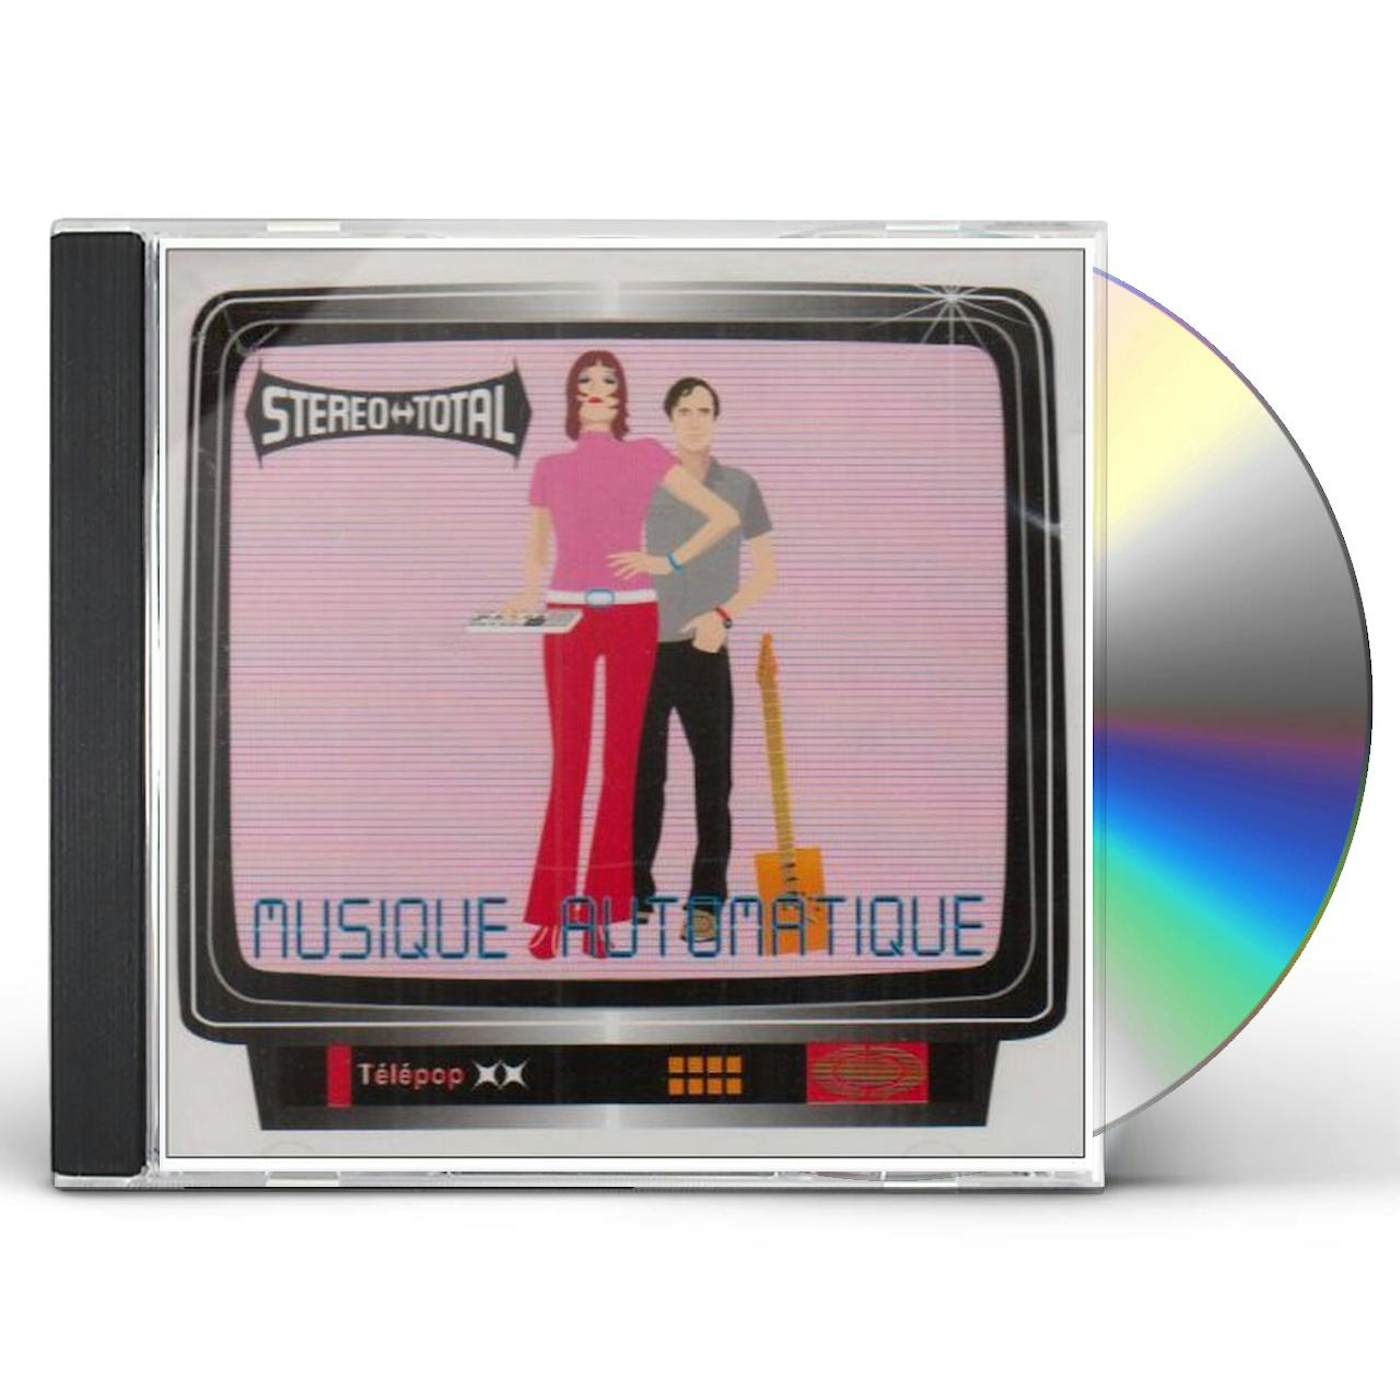 Stereo Total MUSIQUE AUTOMATIQUE CD